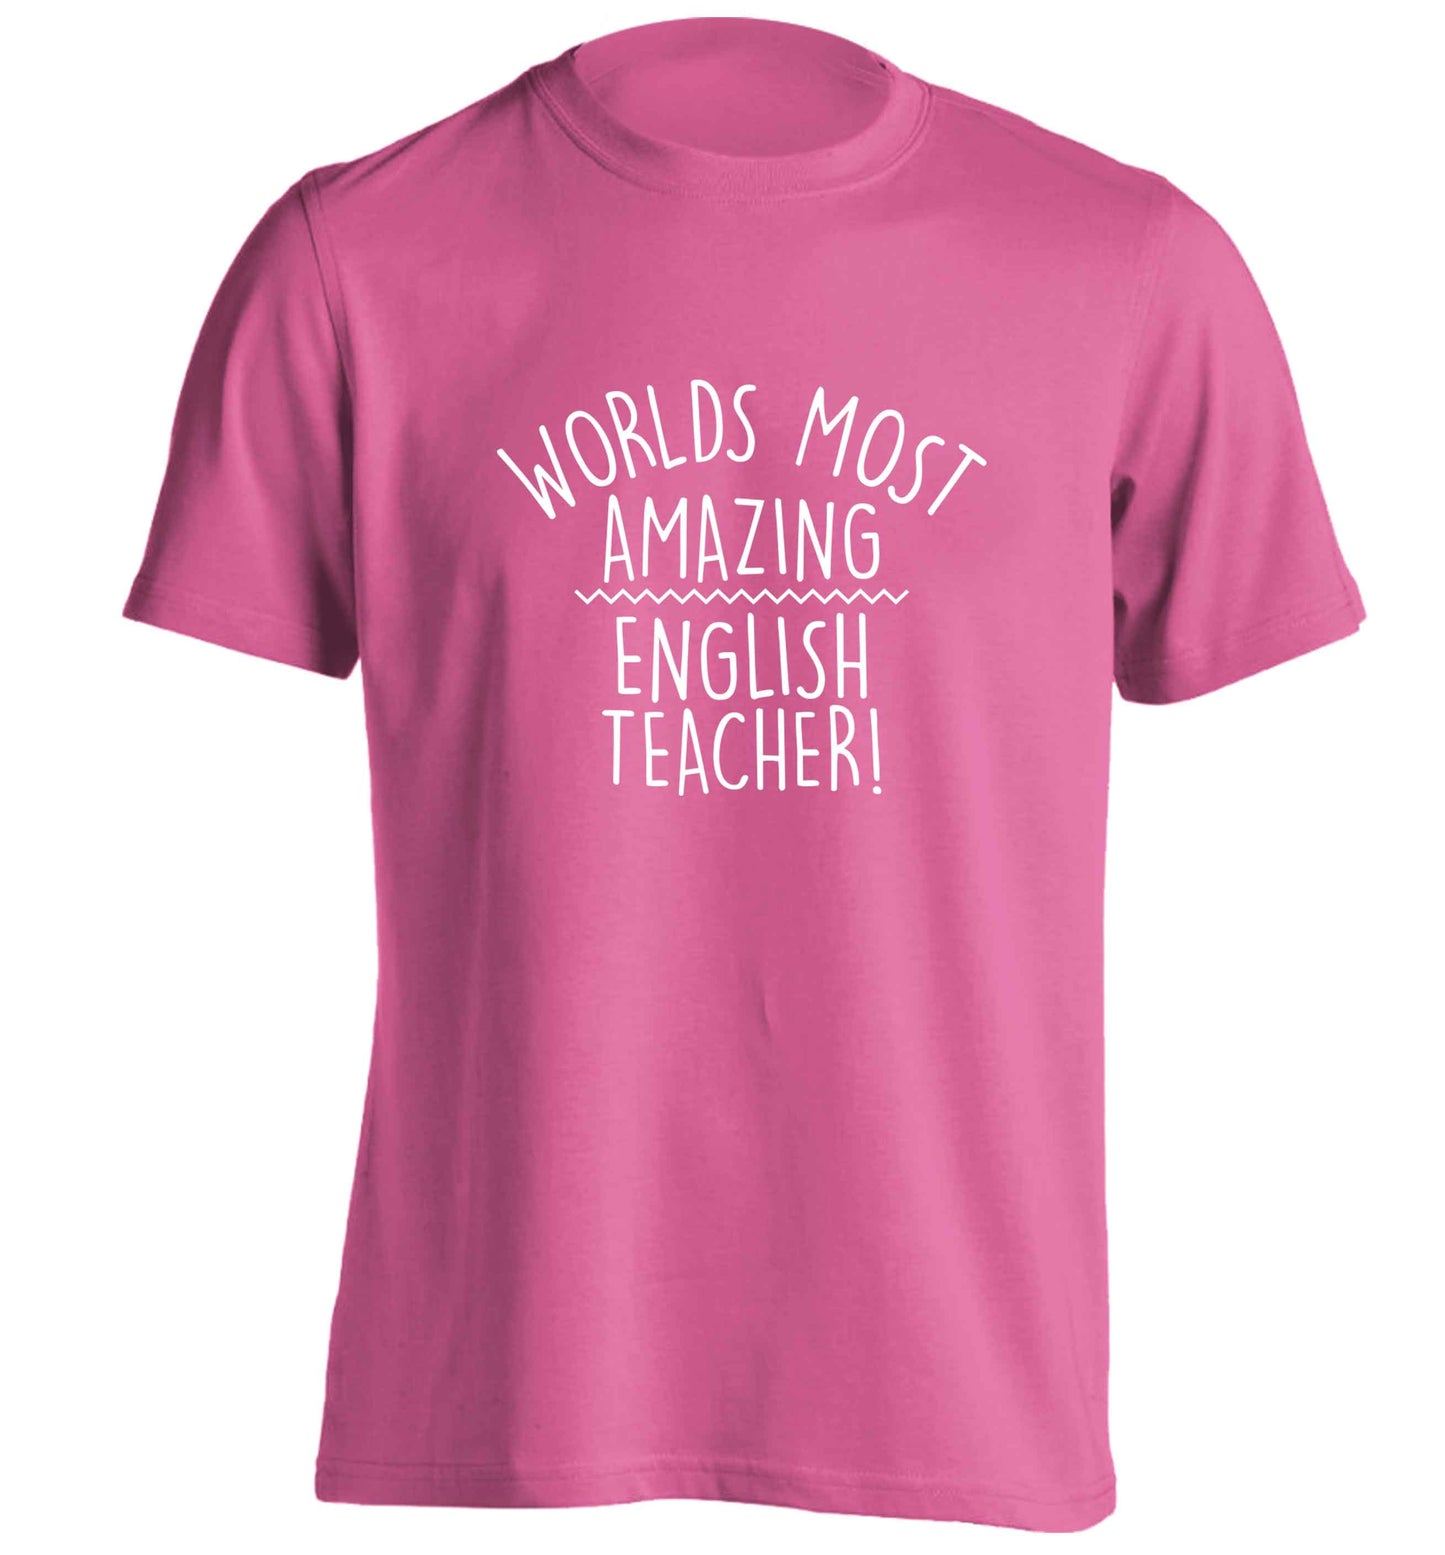 Worlds most amazing English teacher adults unisex pink Tshirt 2XL